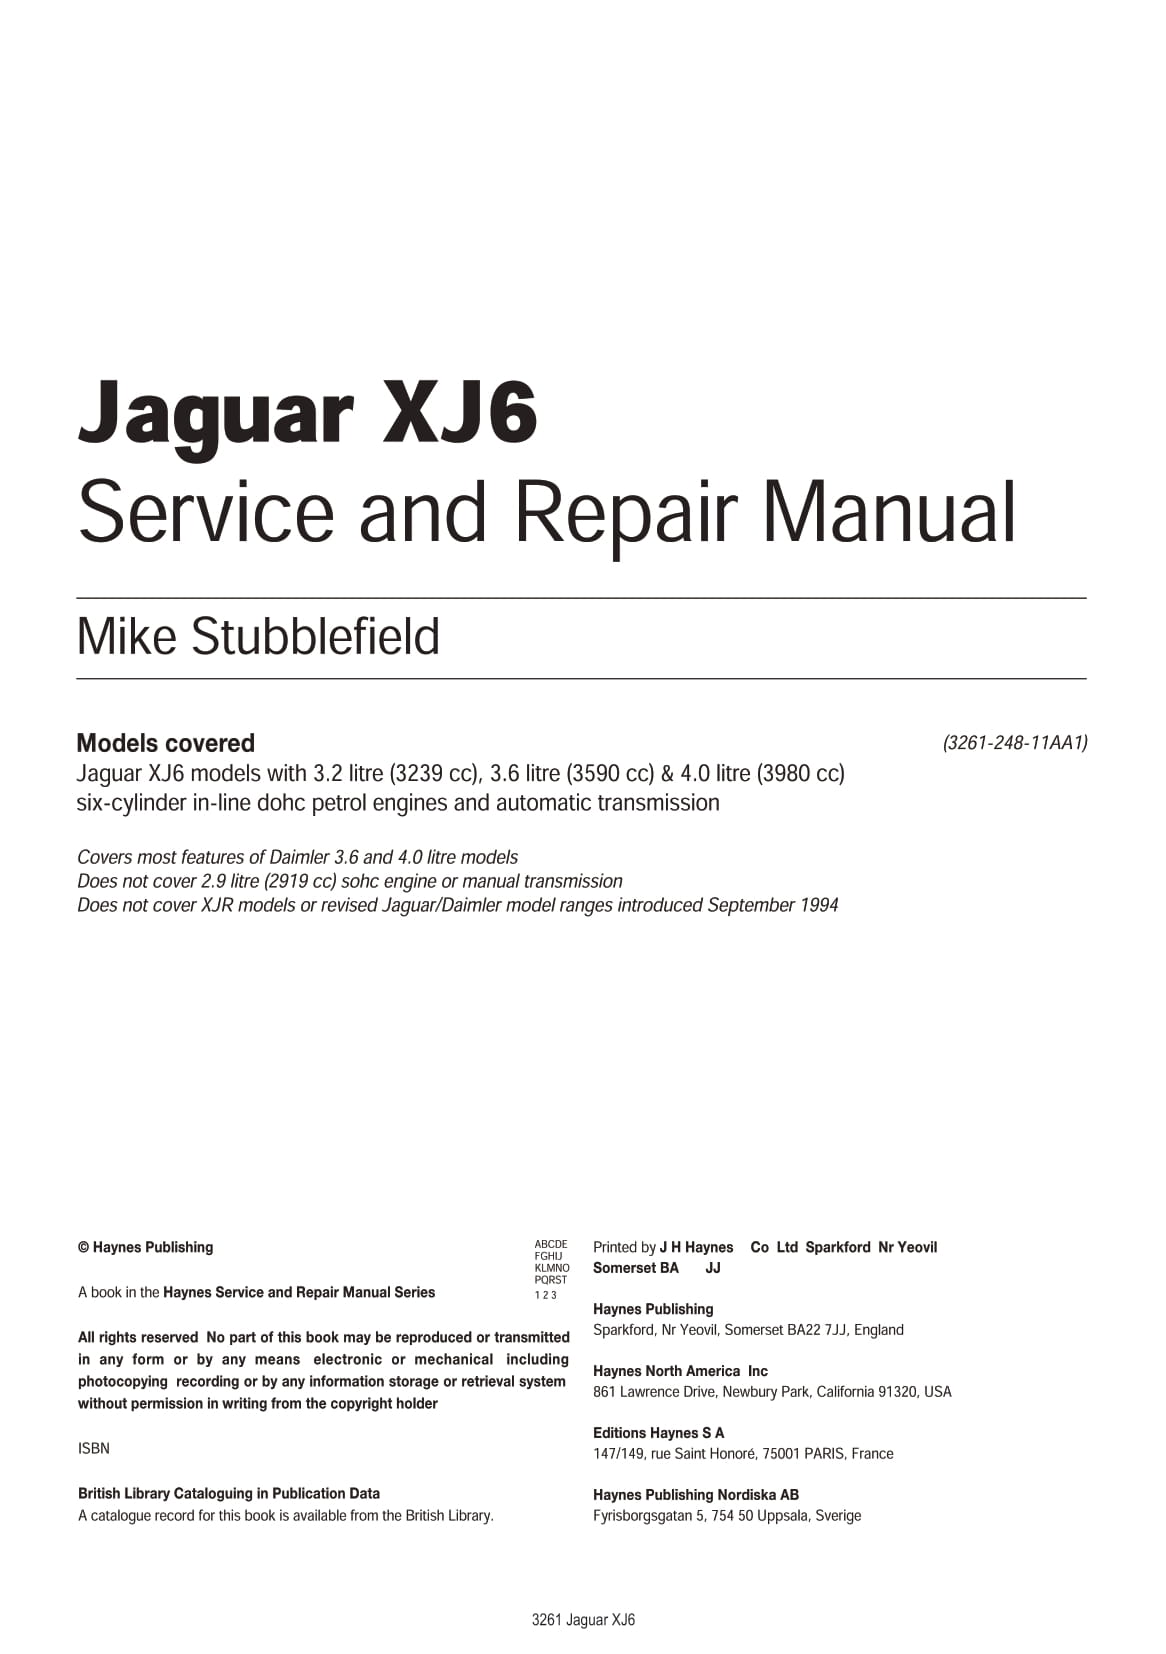 Jaguar Service and Repair Gebruikershandleiding XJ6